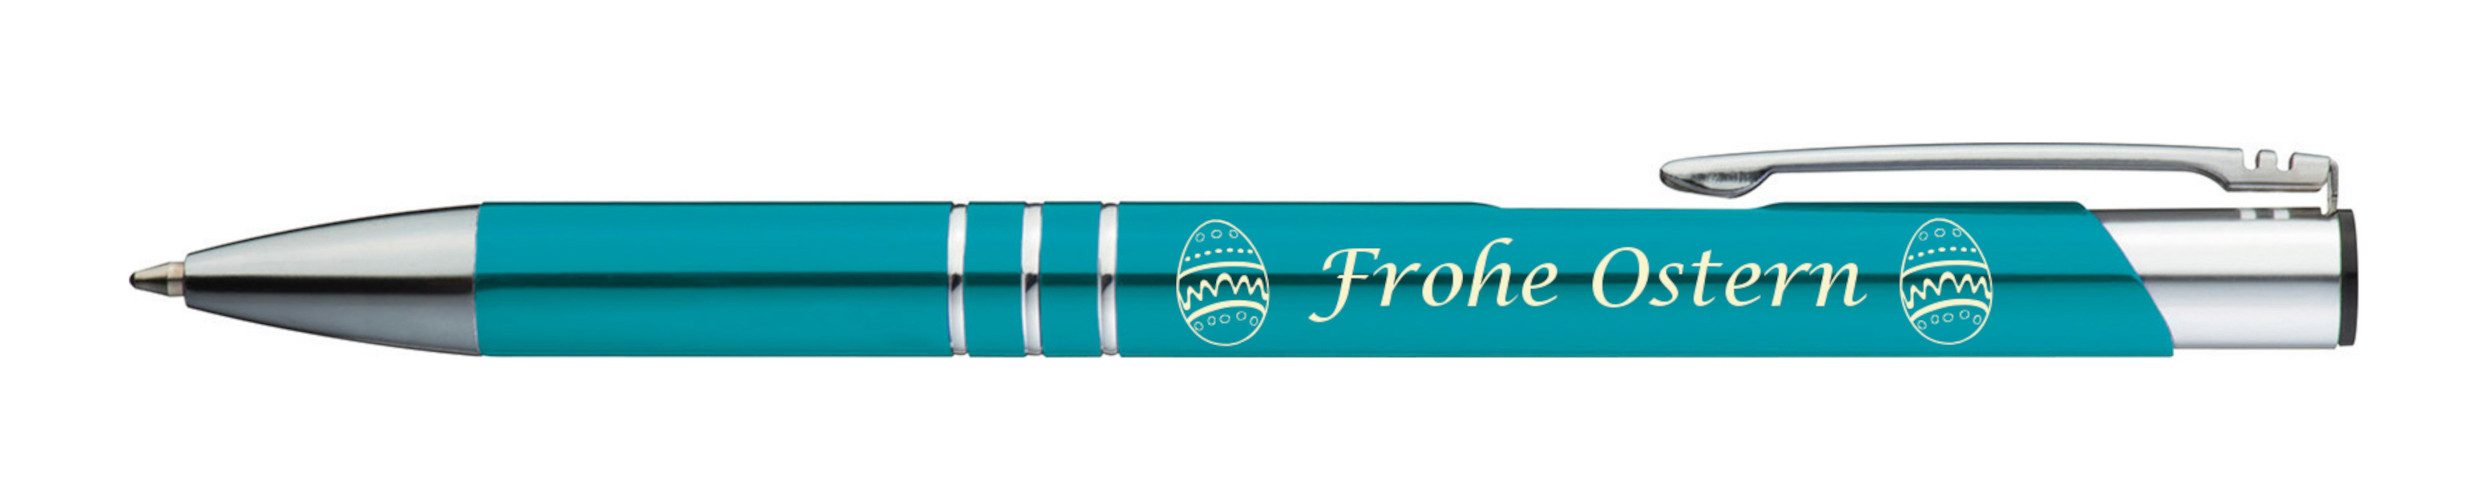 Livepac Office Kugelschreiber 10 Kugelschreiber mit Gravur "Frohe Ostern" / aus Metall / Farbe: türk